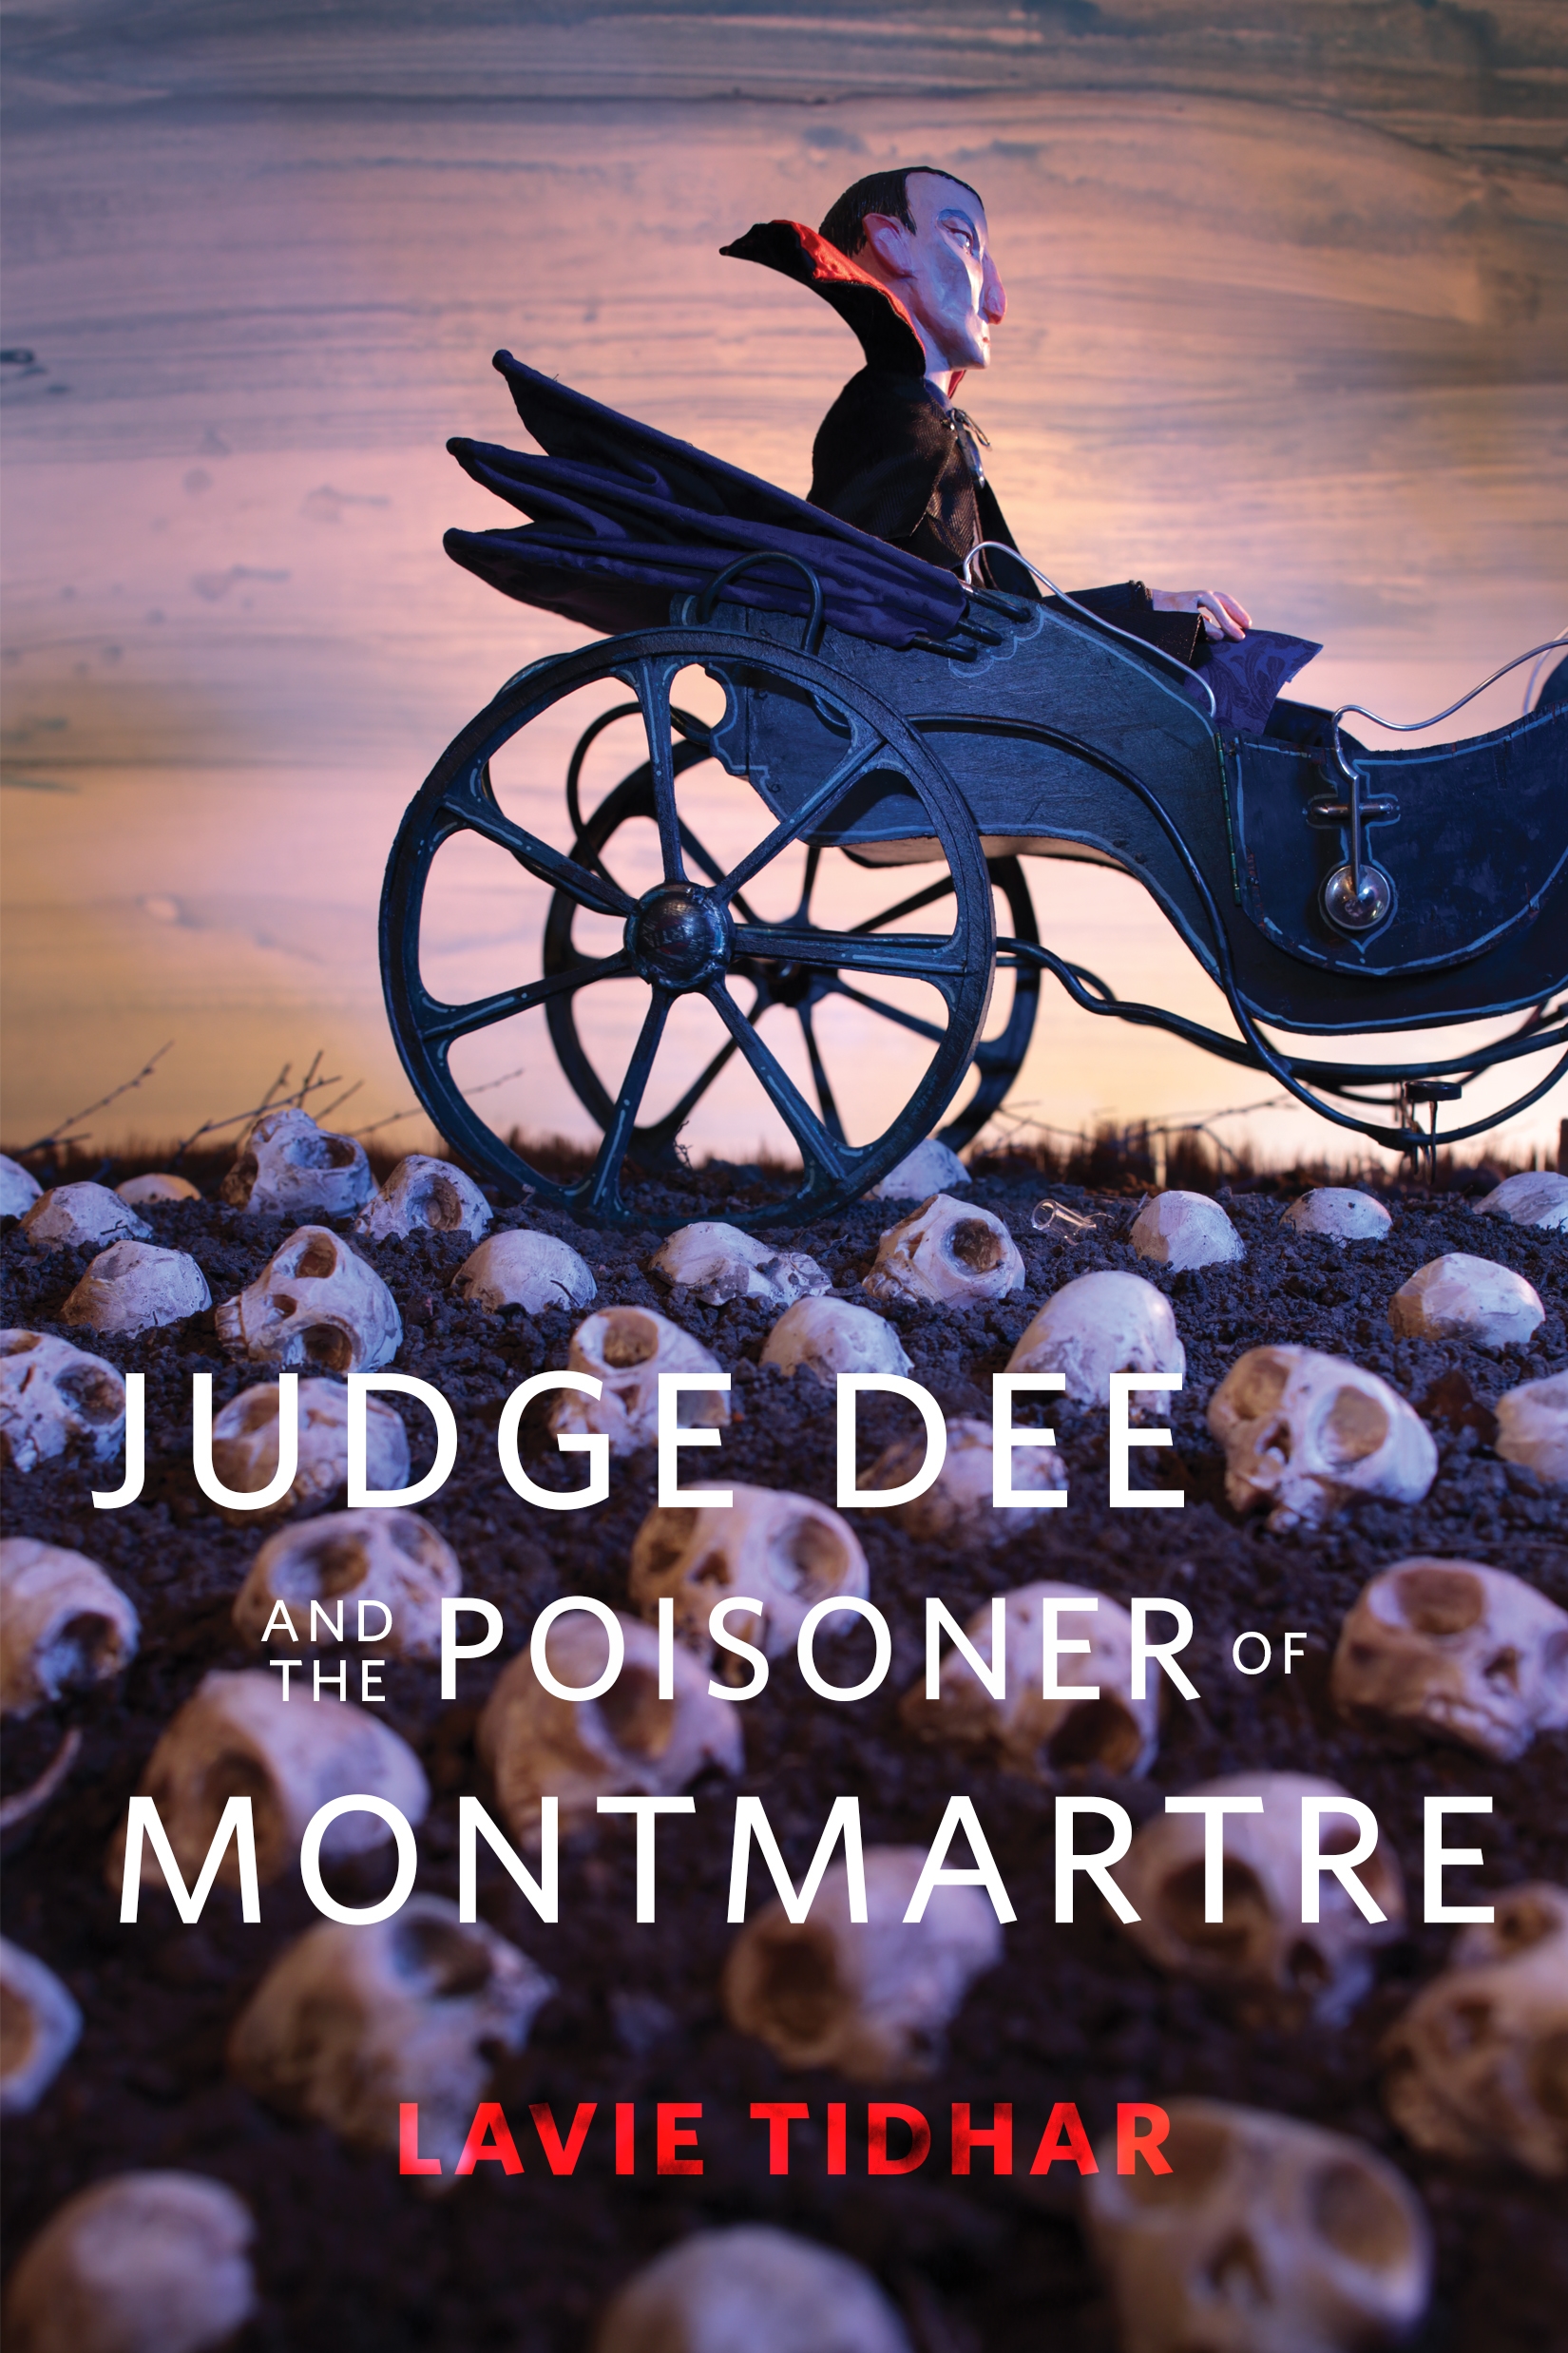 Judge Dee and the Poisoner of Montmartre : A Tor.com Original by Lavie Tidhar